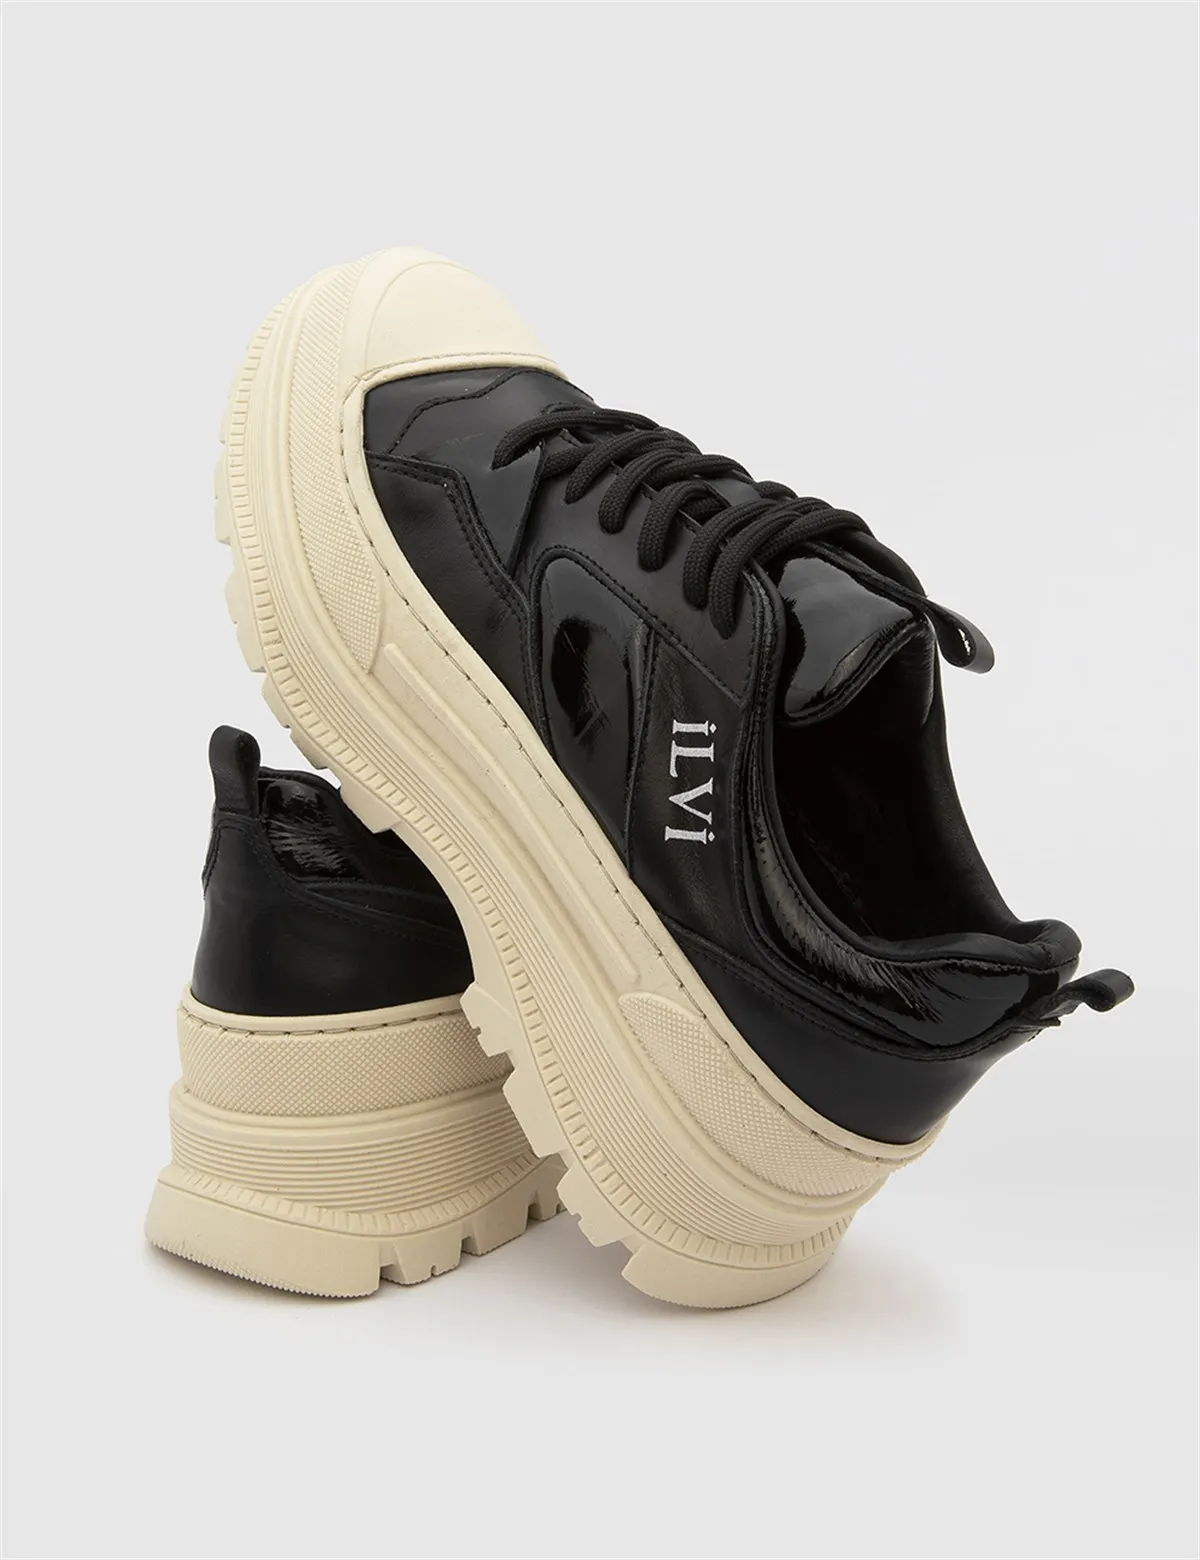 

ILVi-Genuine Leather Handmade Jule Black Patent Sneaker Women's Shoes 2022 Fall/Winter